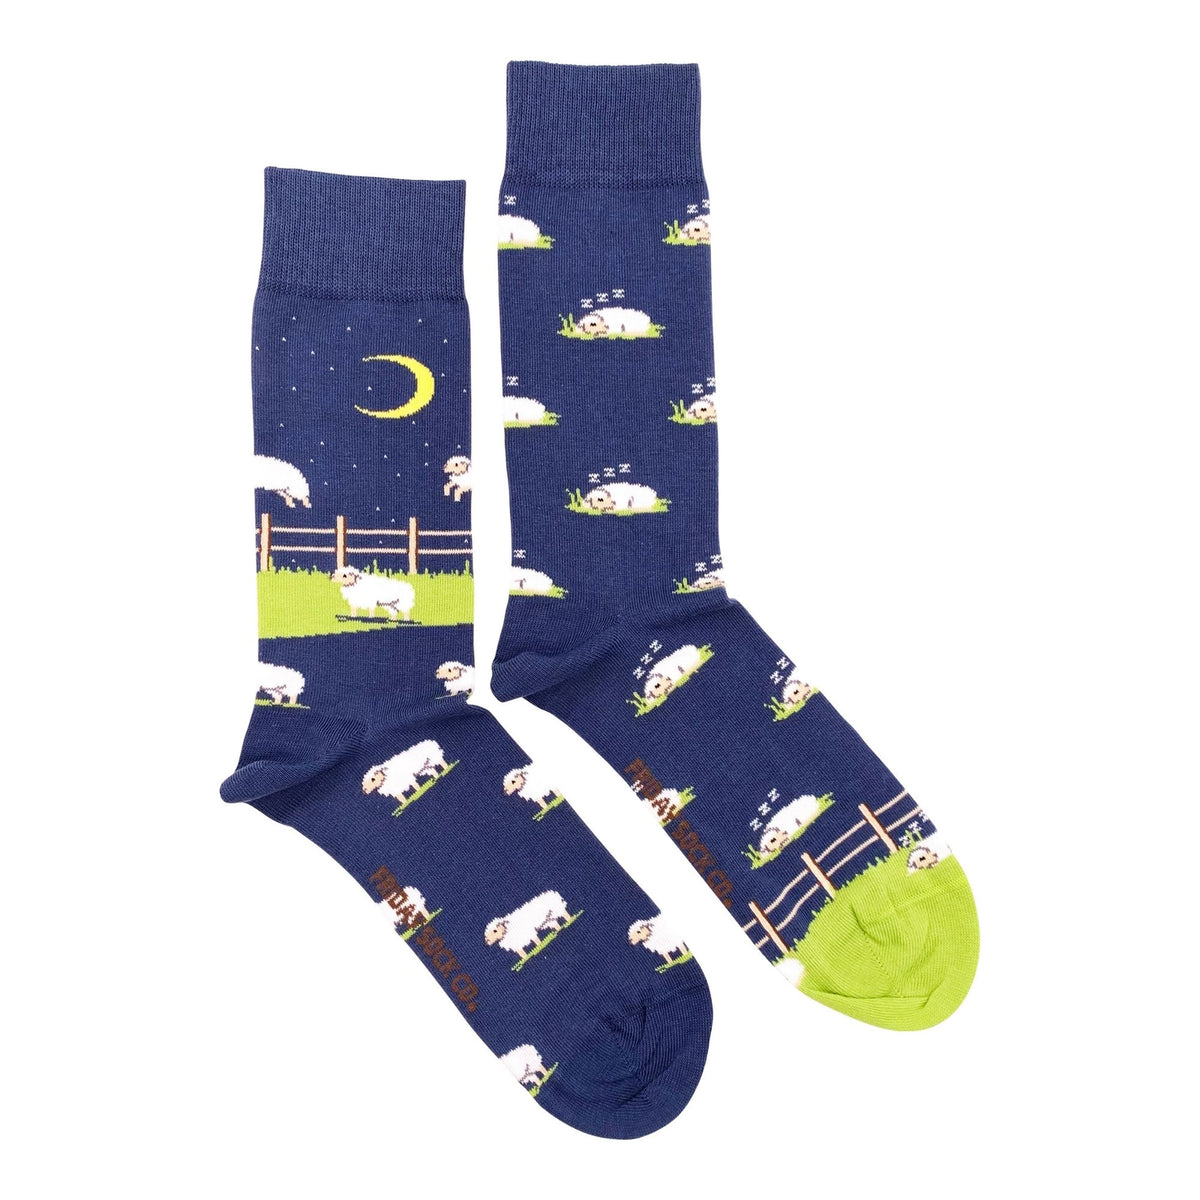 Friday Sock Co. - Men's Socks Jumping Sheep Mismatched